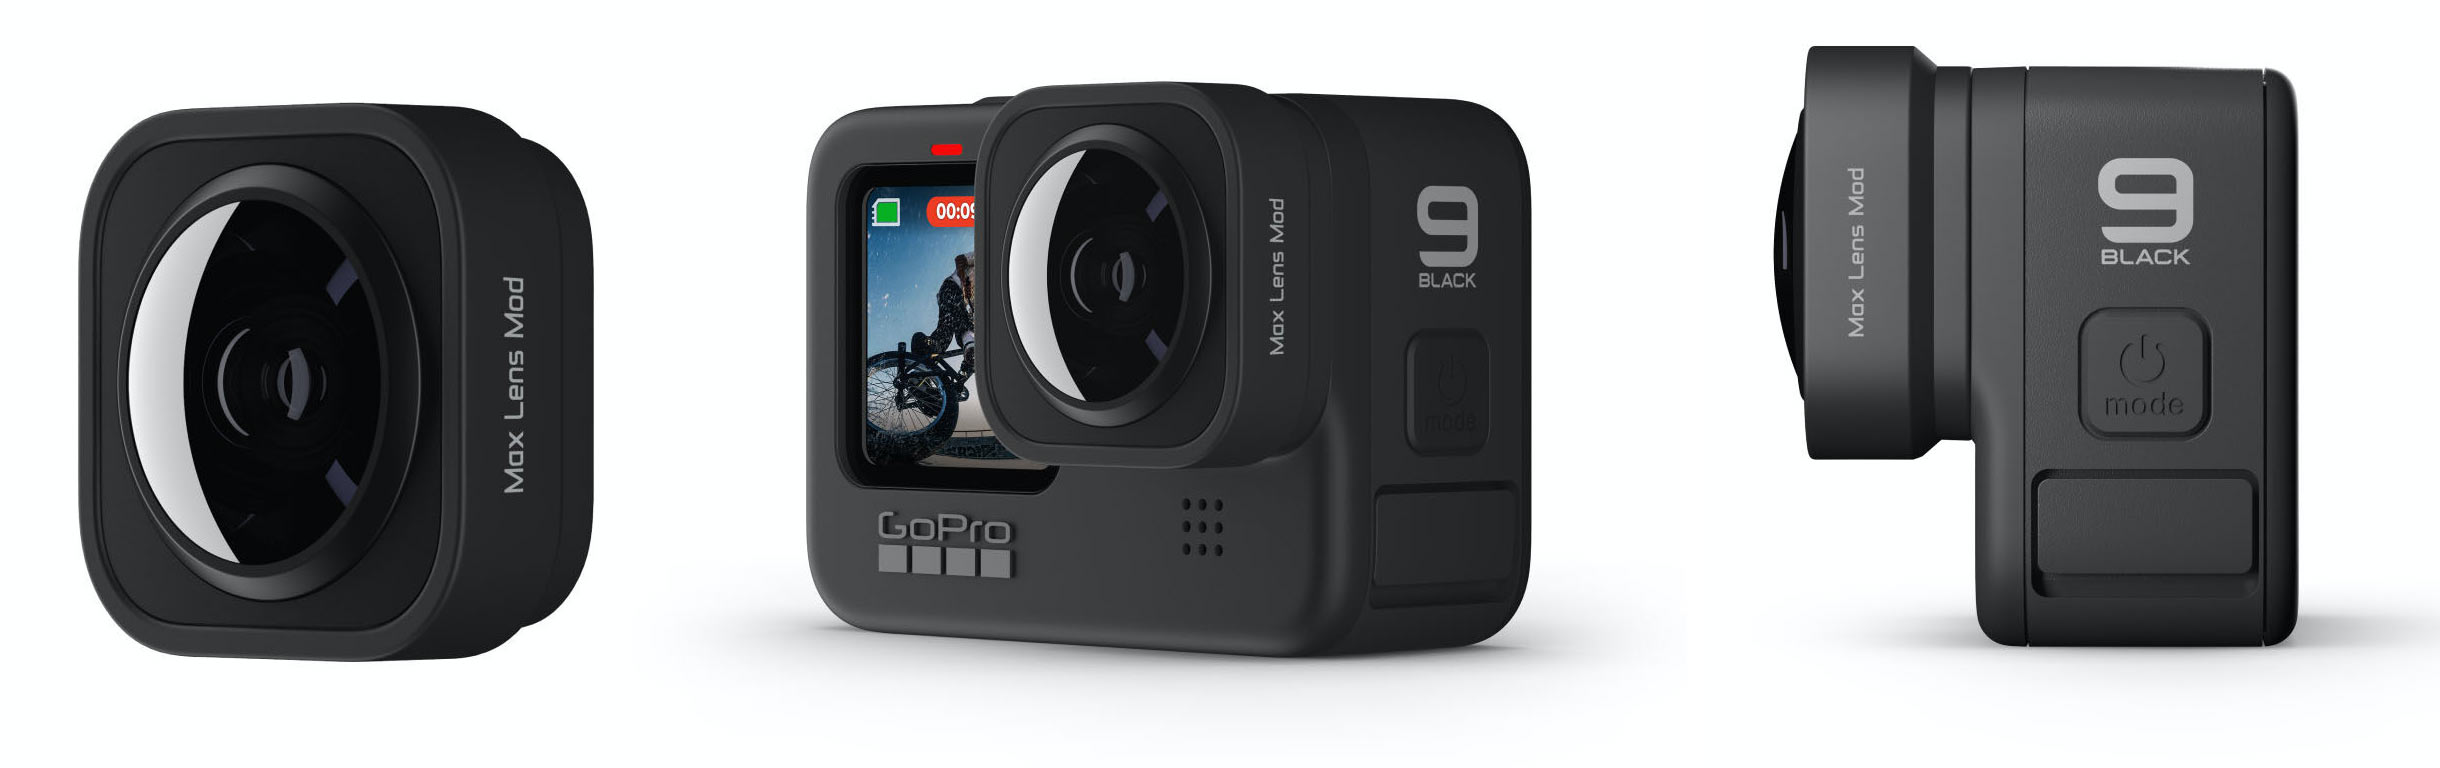 GoPro hero 9 black max lens mod ultra wide angle lens